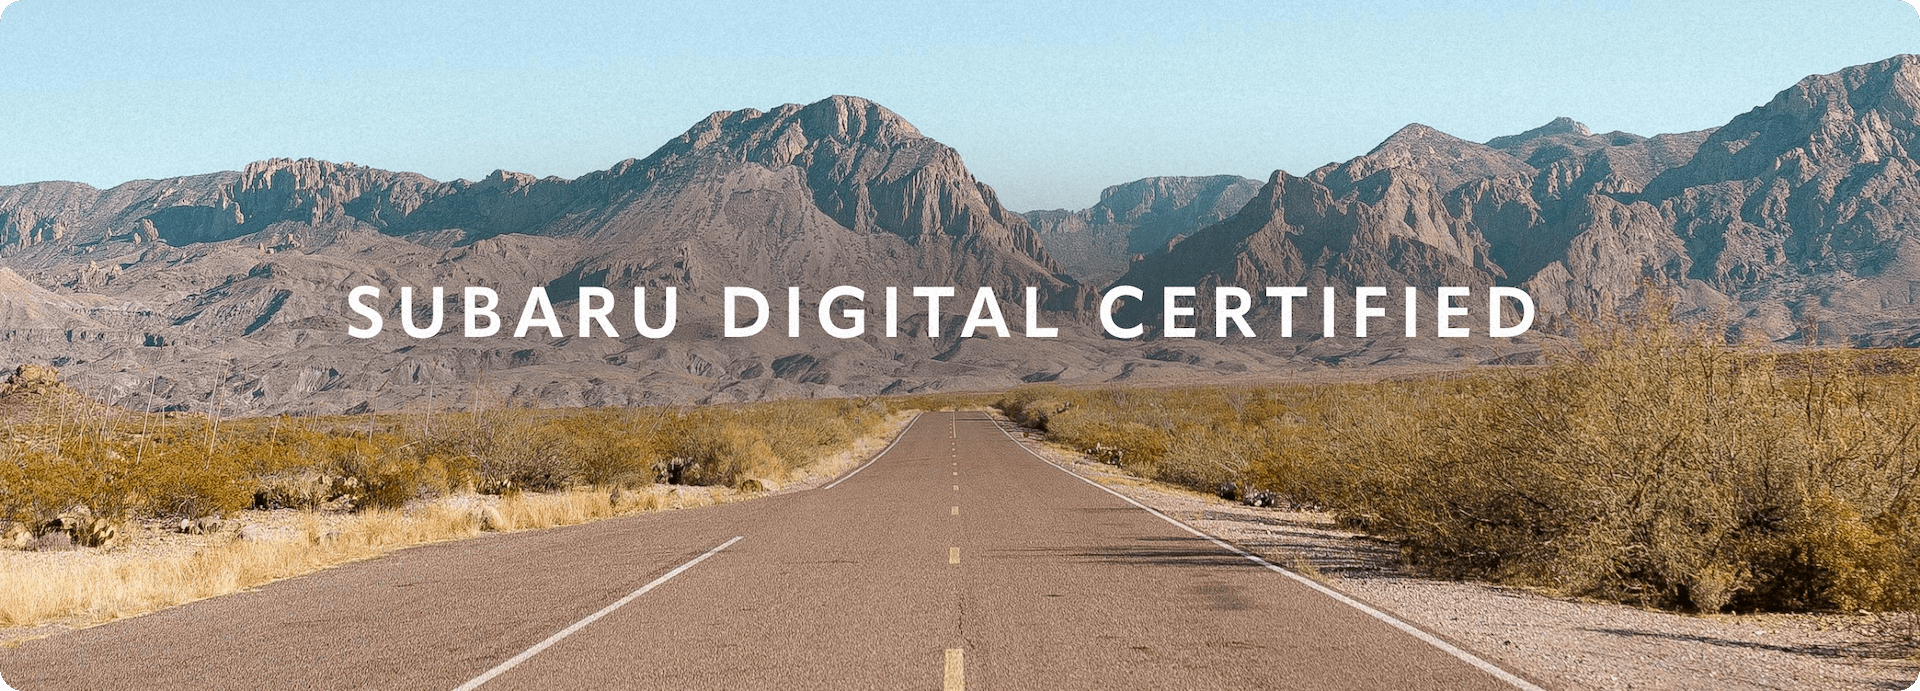 Subaru Digital Certified